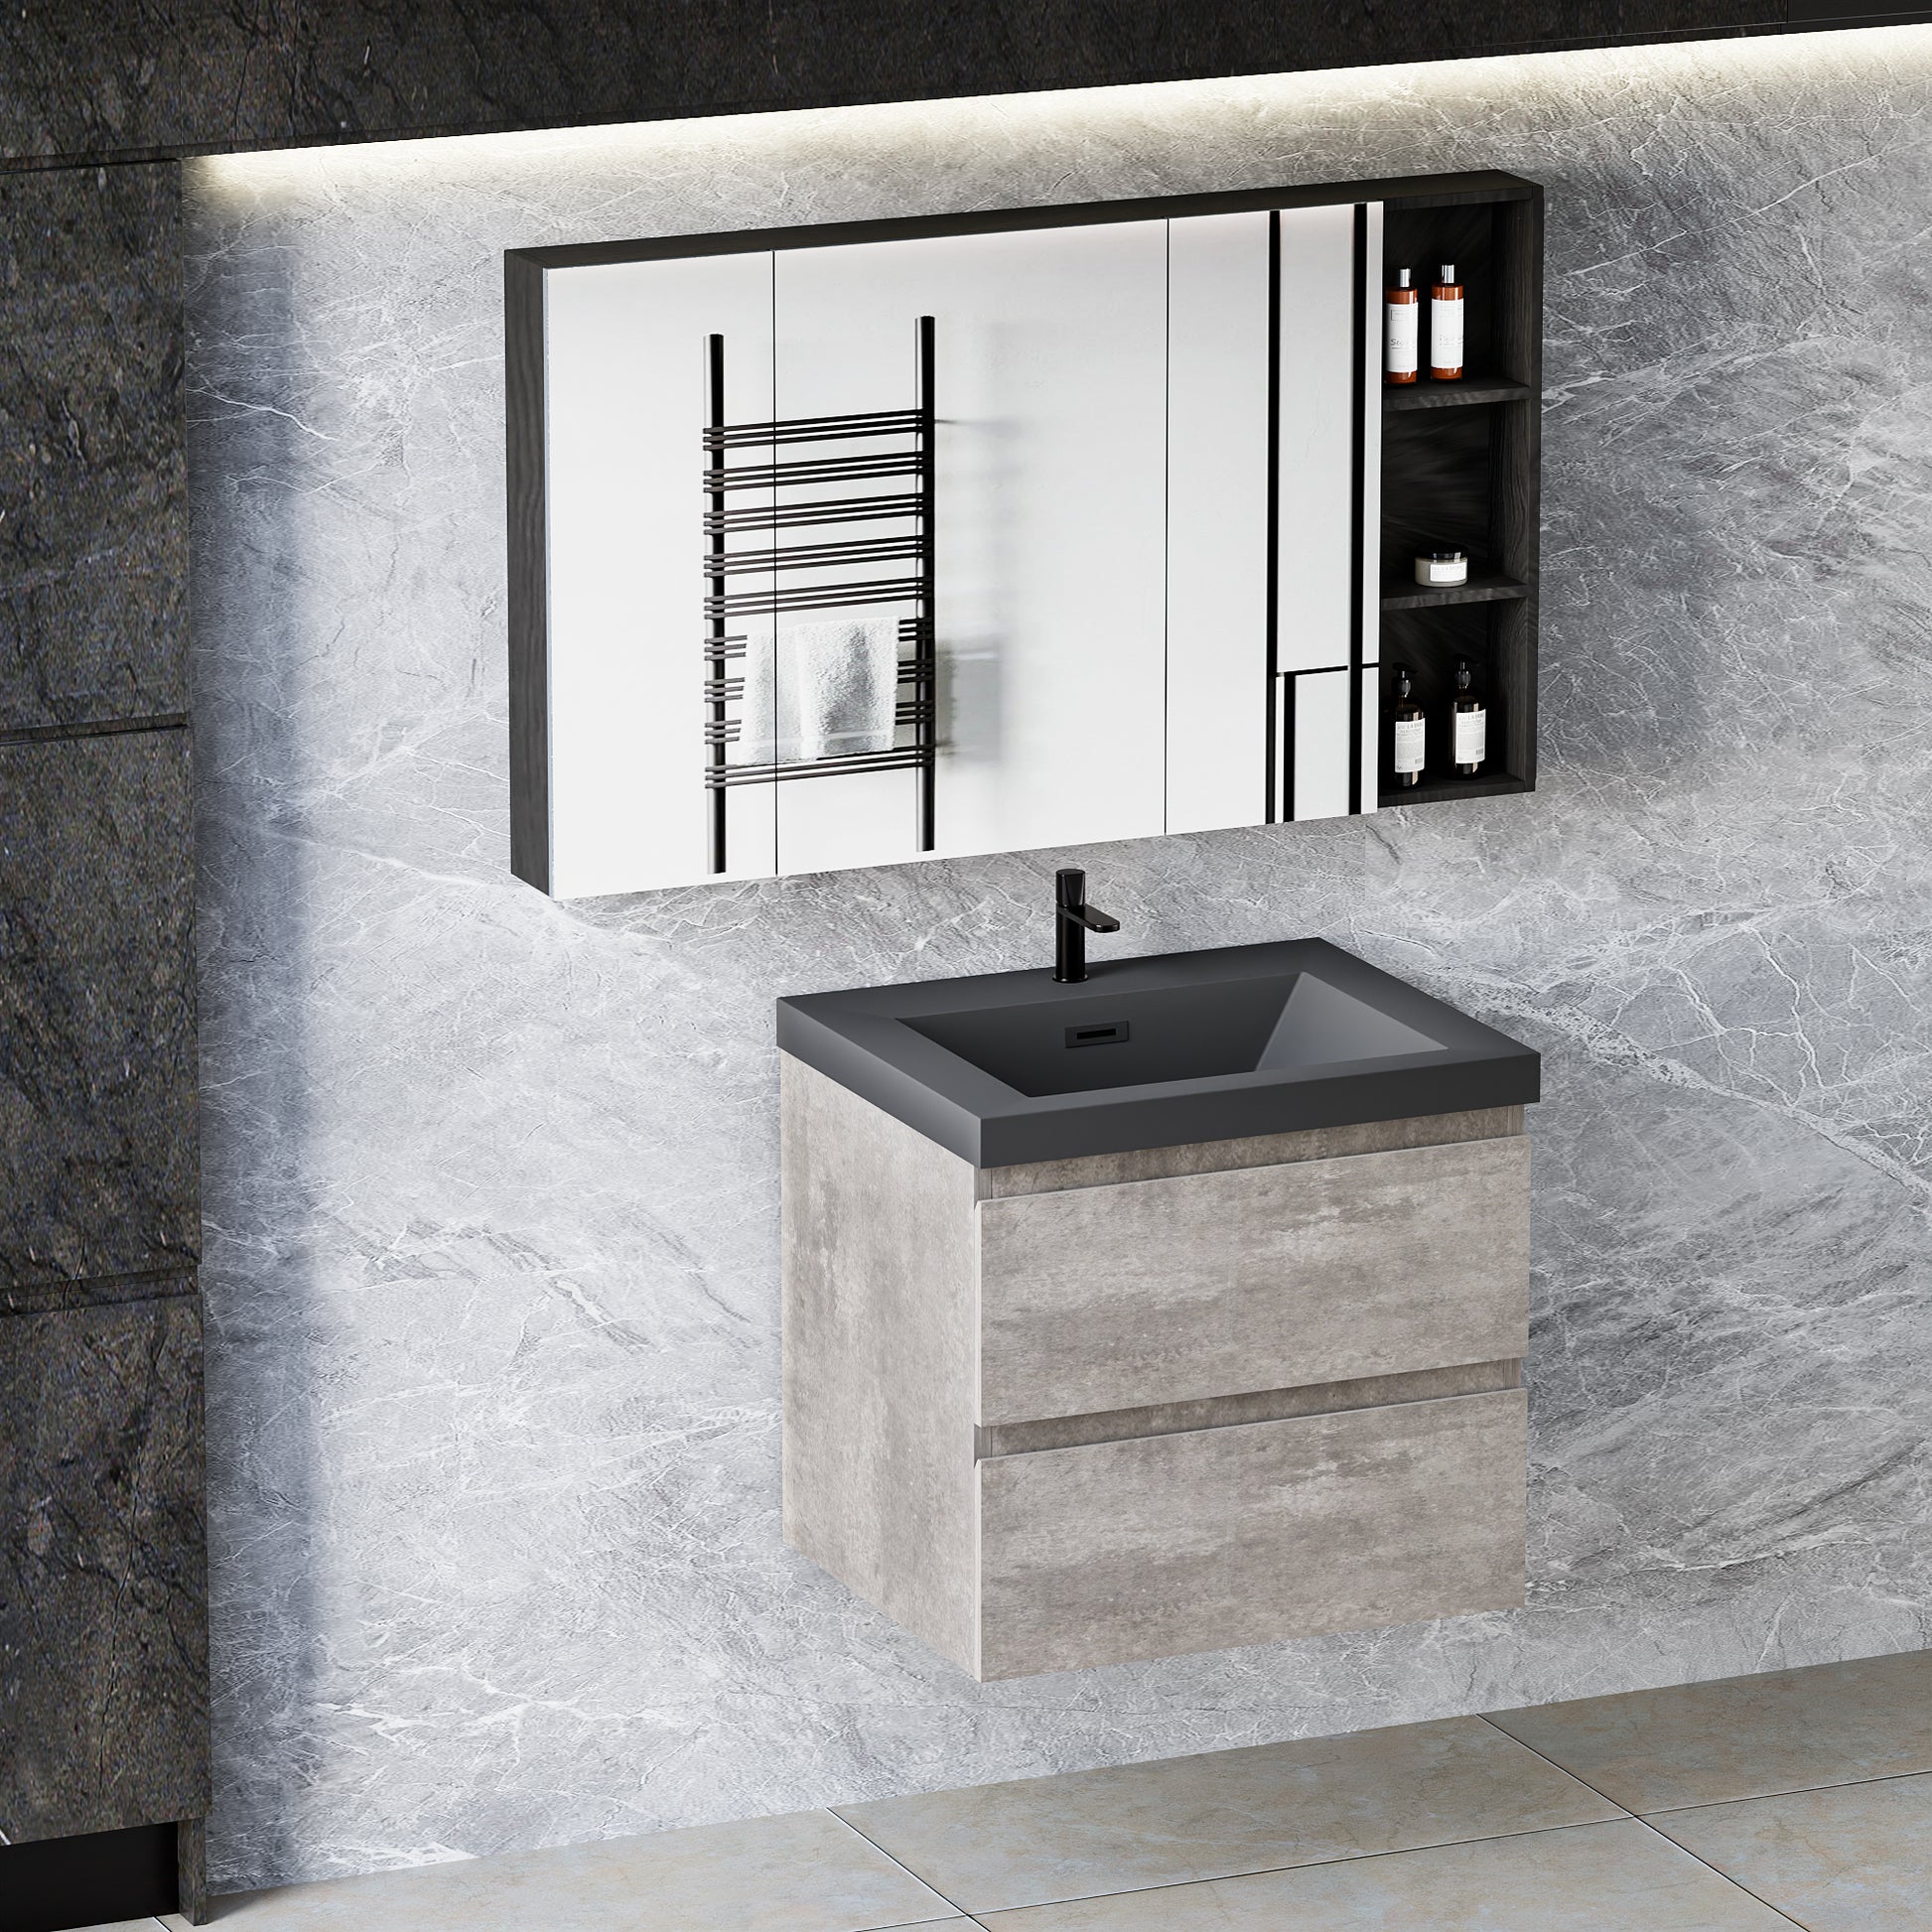 24" Floating Bathroom Vanity with Sink, Modern Wall grey-bathroom-wall mounted-melamine